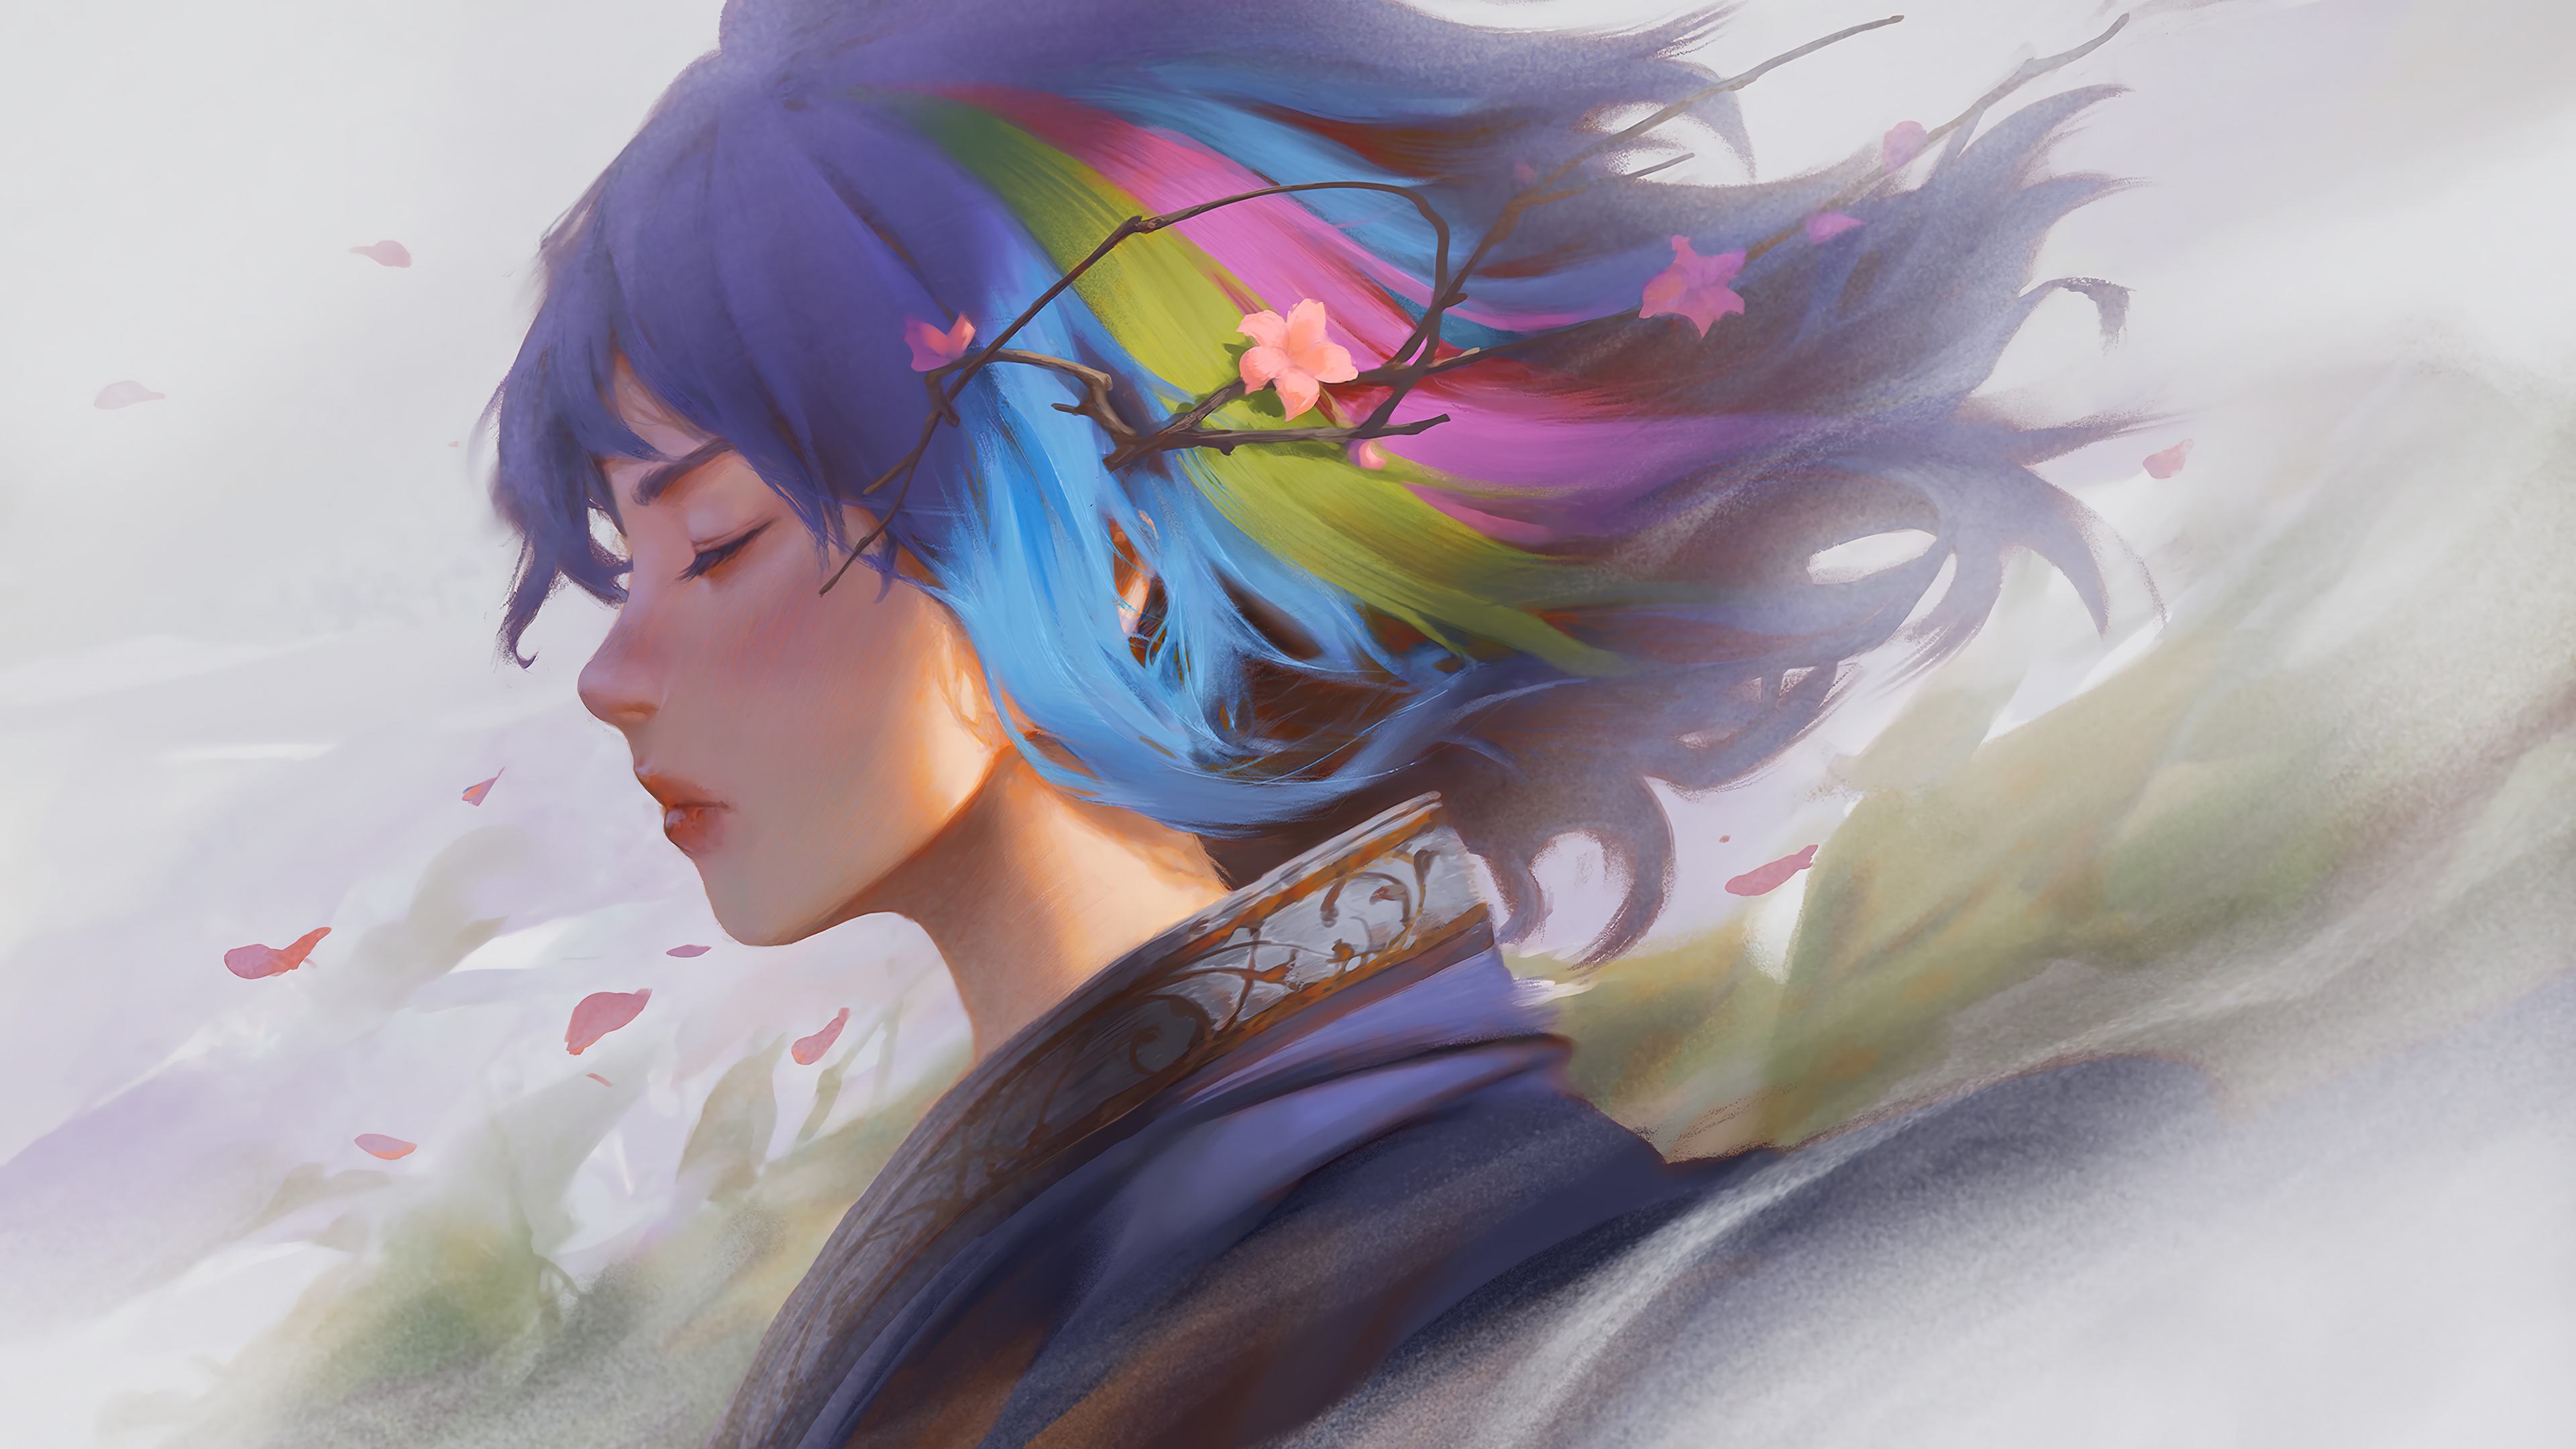 Fantasy Girl Closed Eyes Blue Hair Kimono Women Flowers Flower In Hair Artwork Fantasy Art Digital A 3840x2160